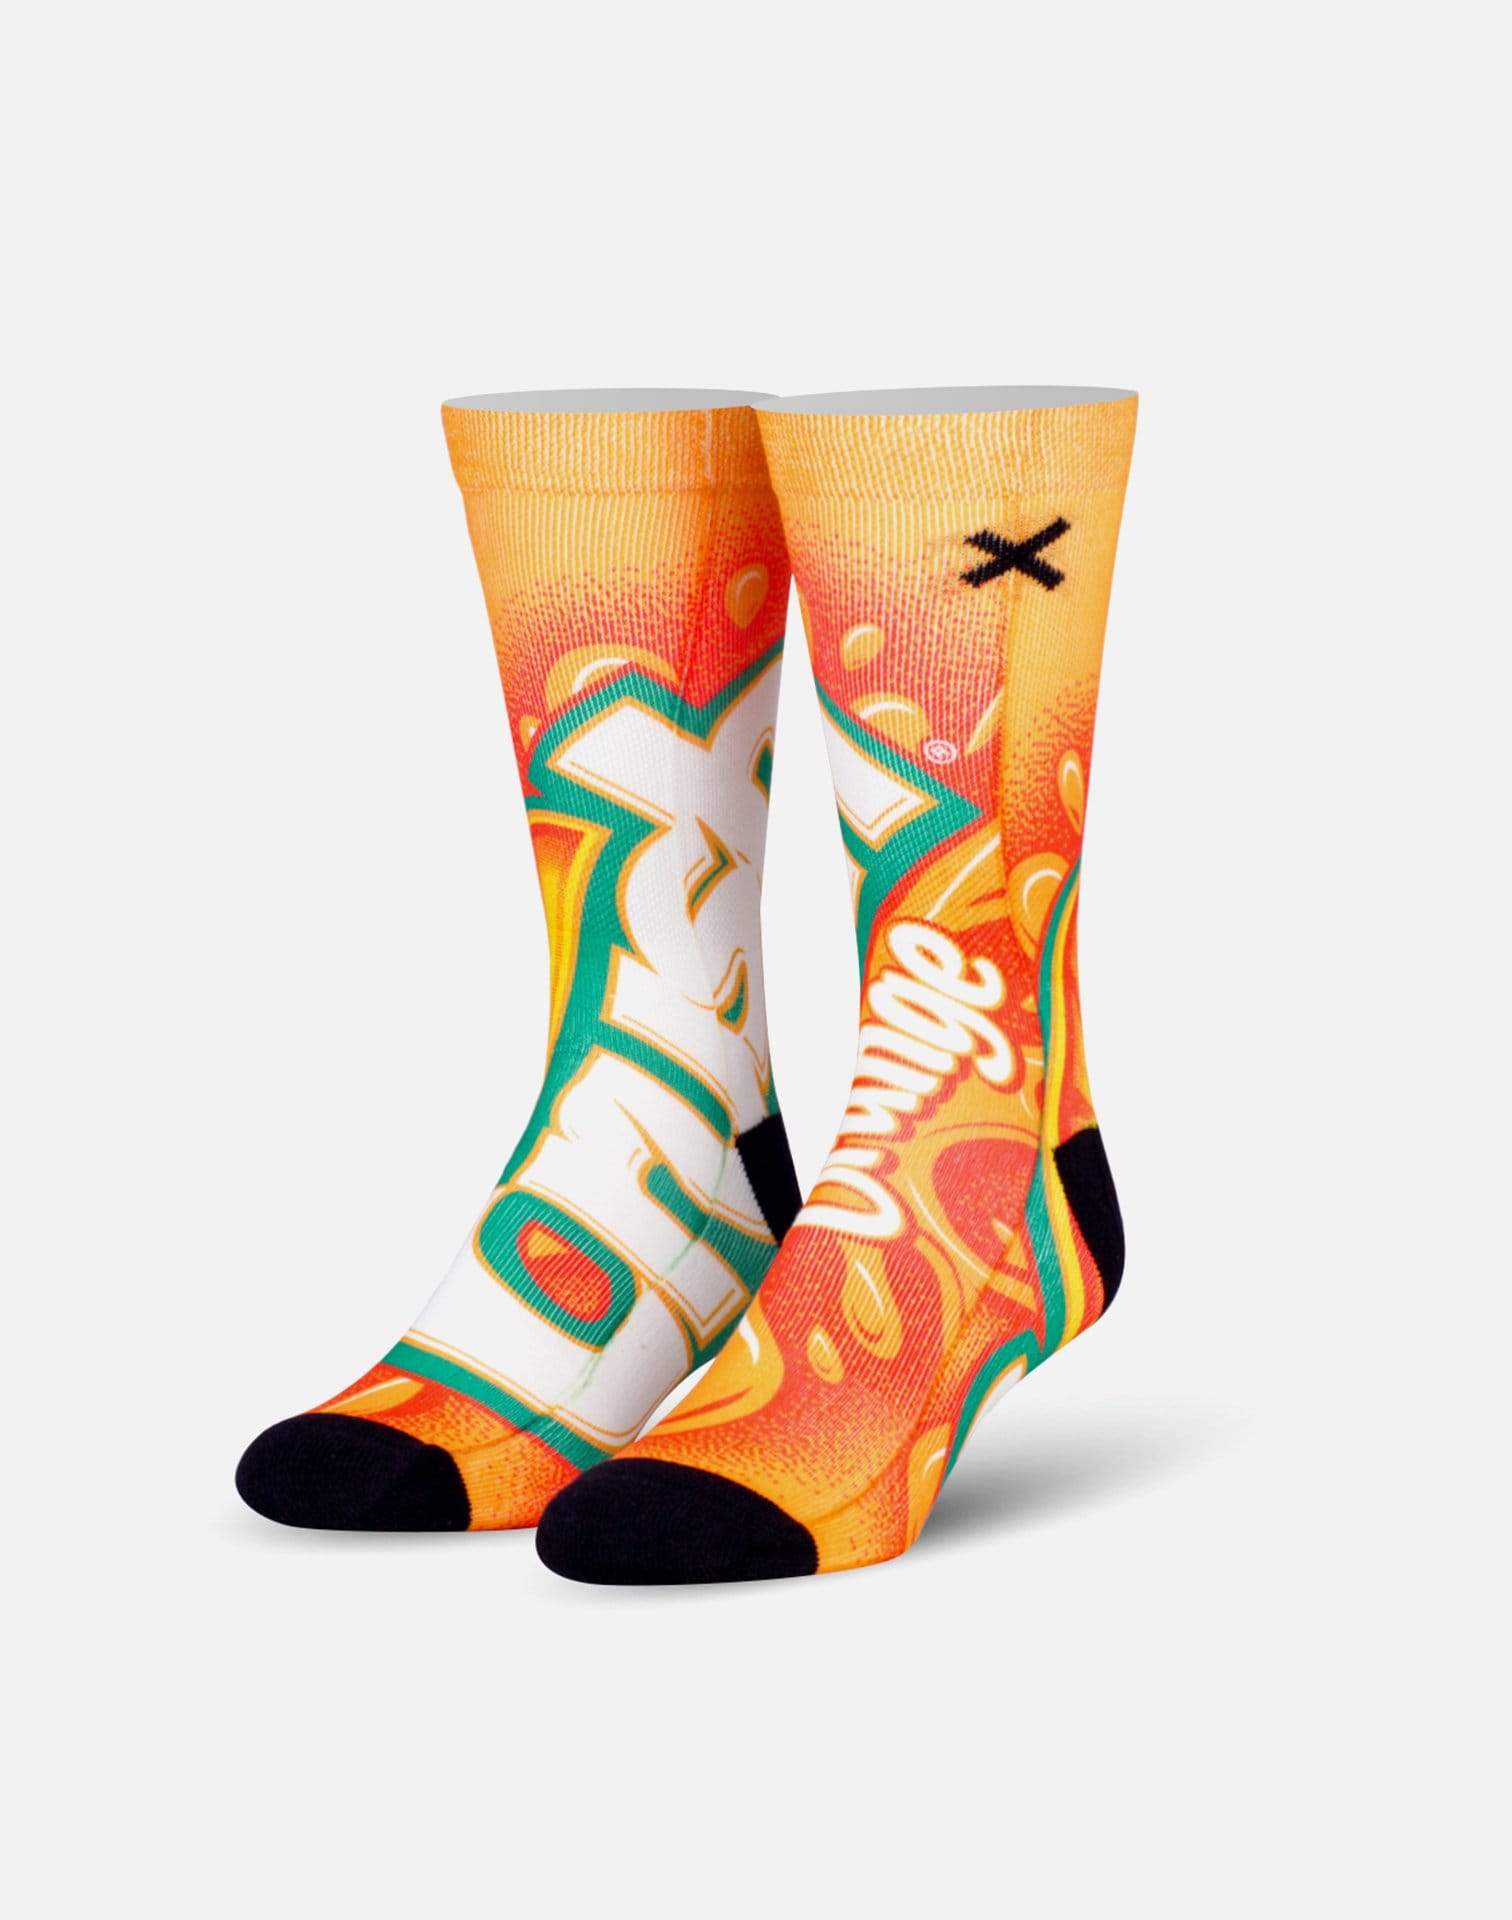 Odd Sox Orange Crush Socks